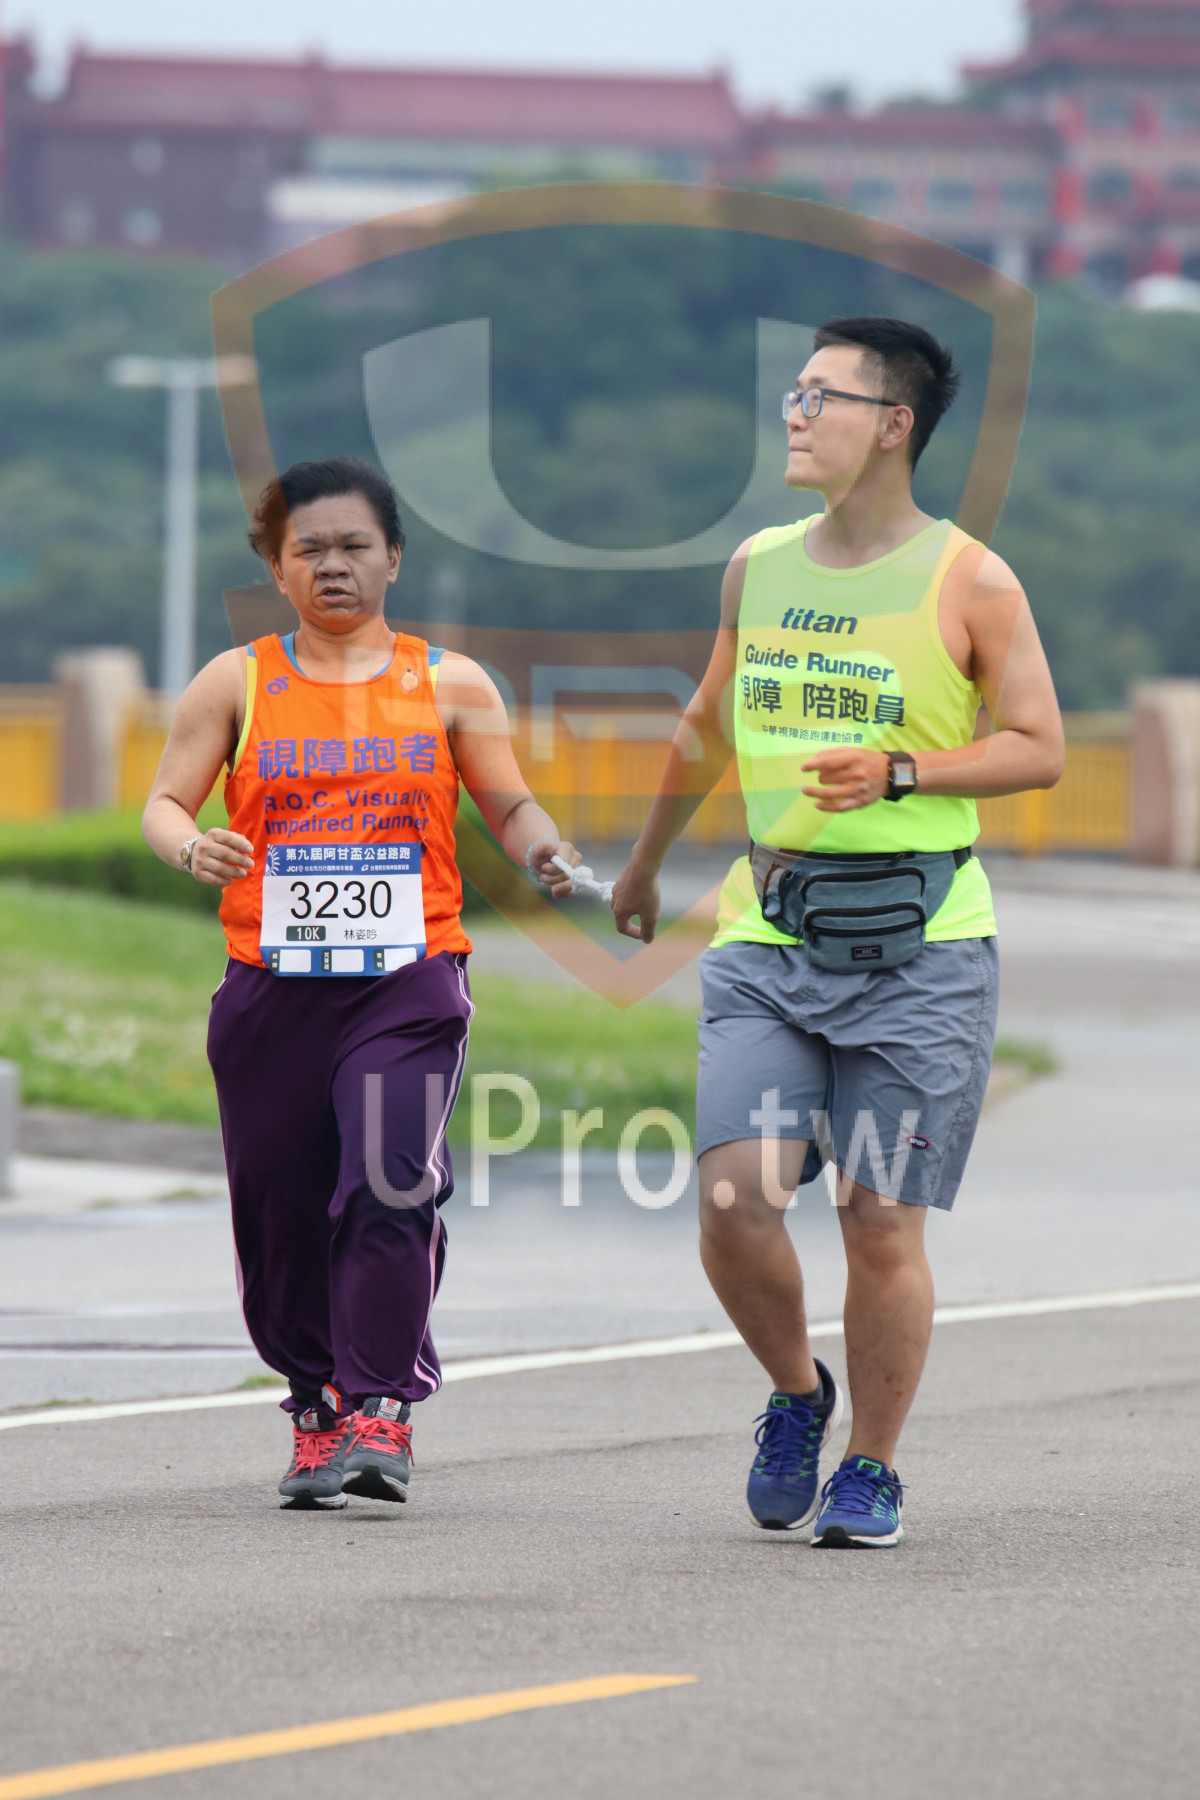 titan,Guide Runner,,,,,3230,10K,IAS |2018 第九屆阿甘盃公益路跑|Soryu Asuka Langley